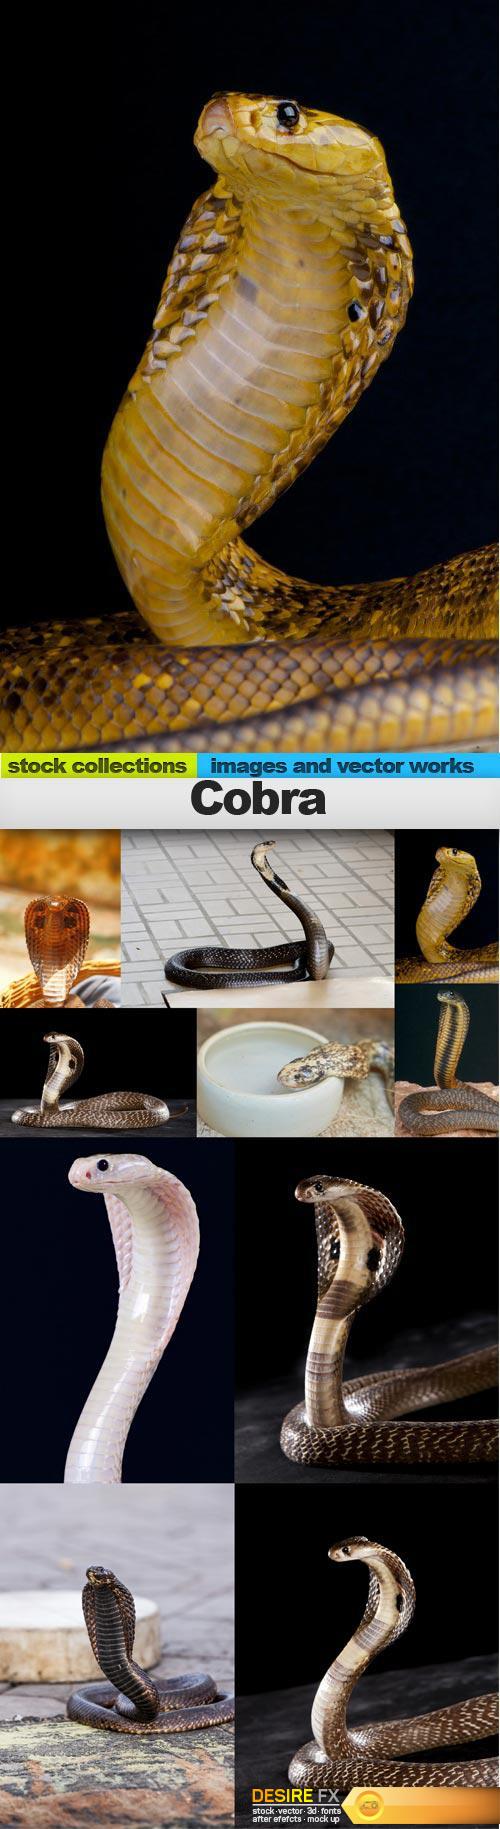 Cobra, 10 x UHQ JPEG